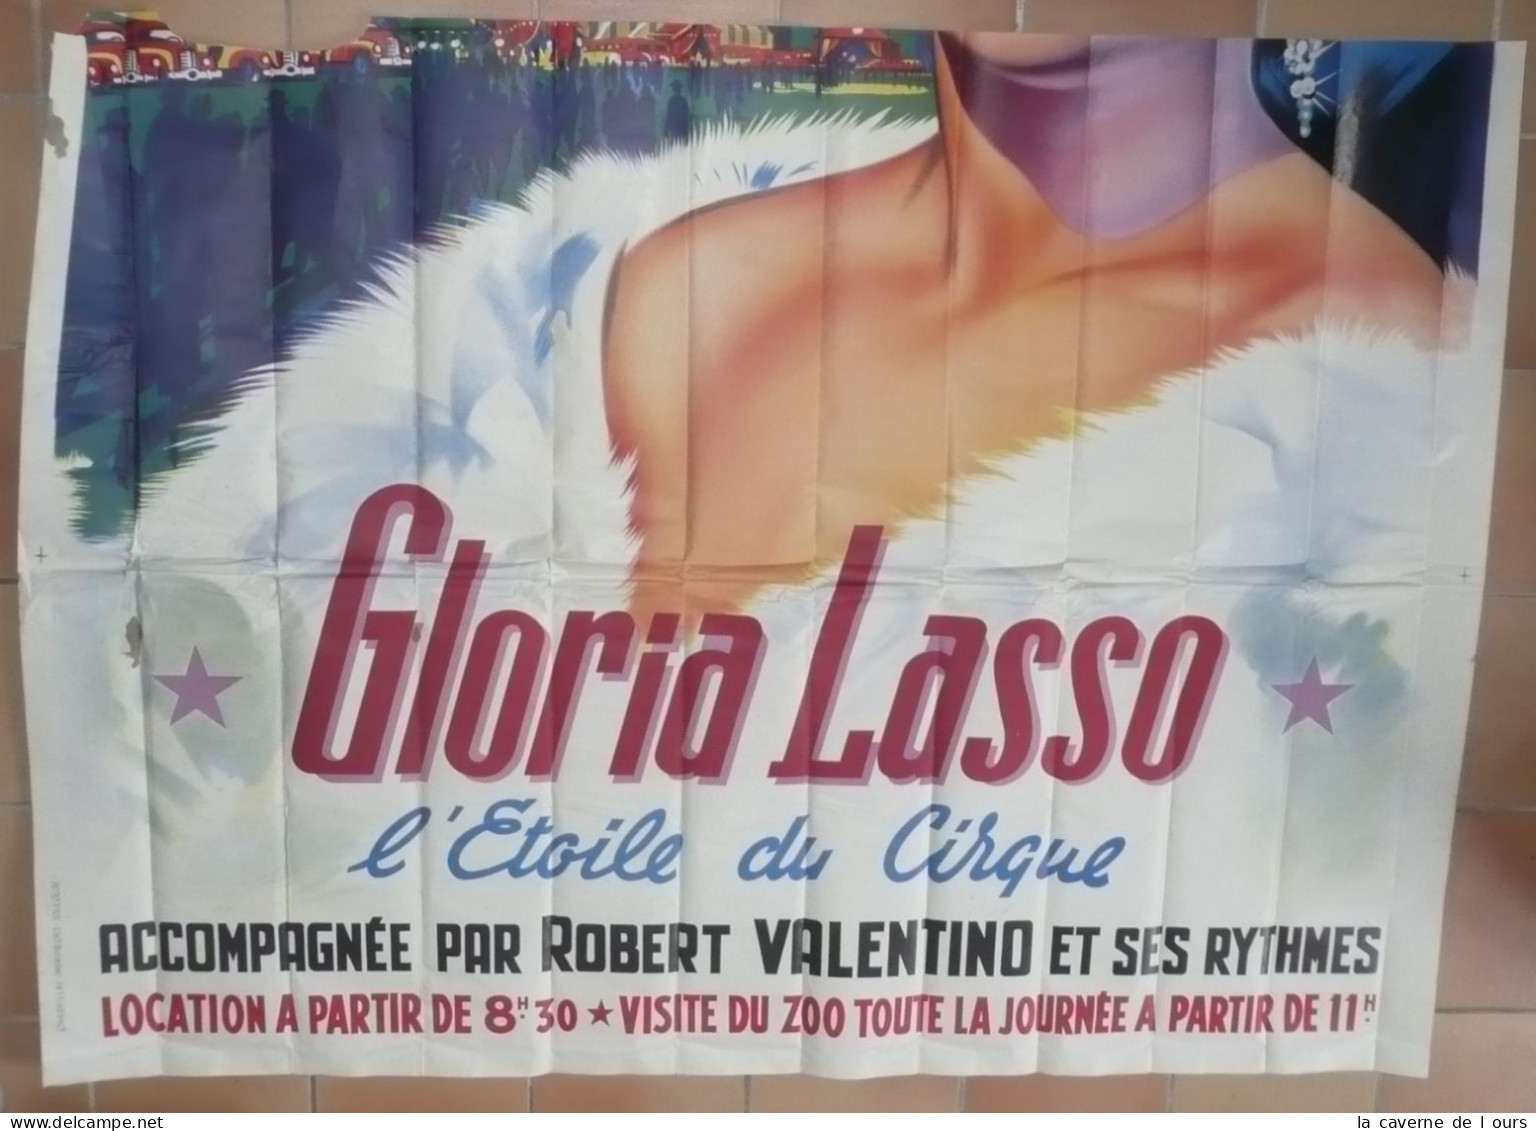 Rare lot de 3 affiches rétro illustrées Cirque PINDER Gloria Lasso Robert Valentino 1950's-60's